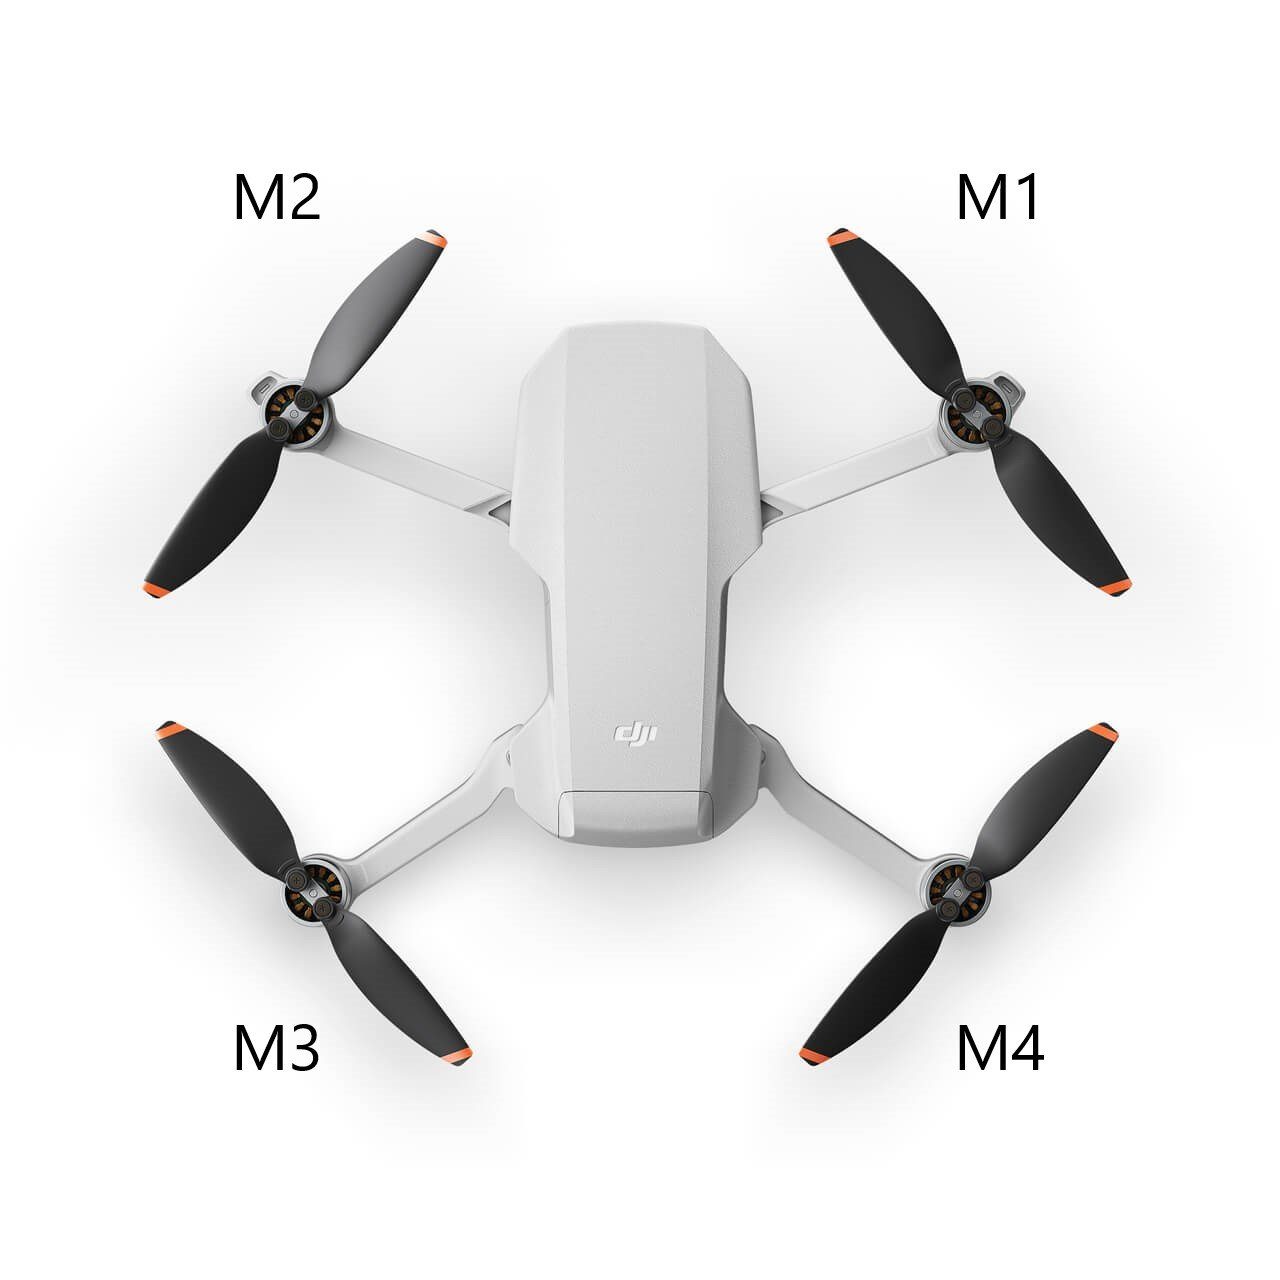 Motor links SE - Mini Drohne DJI Arm M2 Zubehör DJI vorne